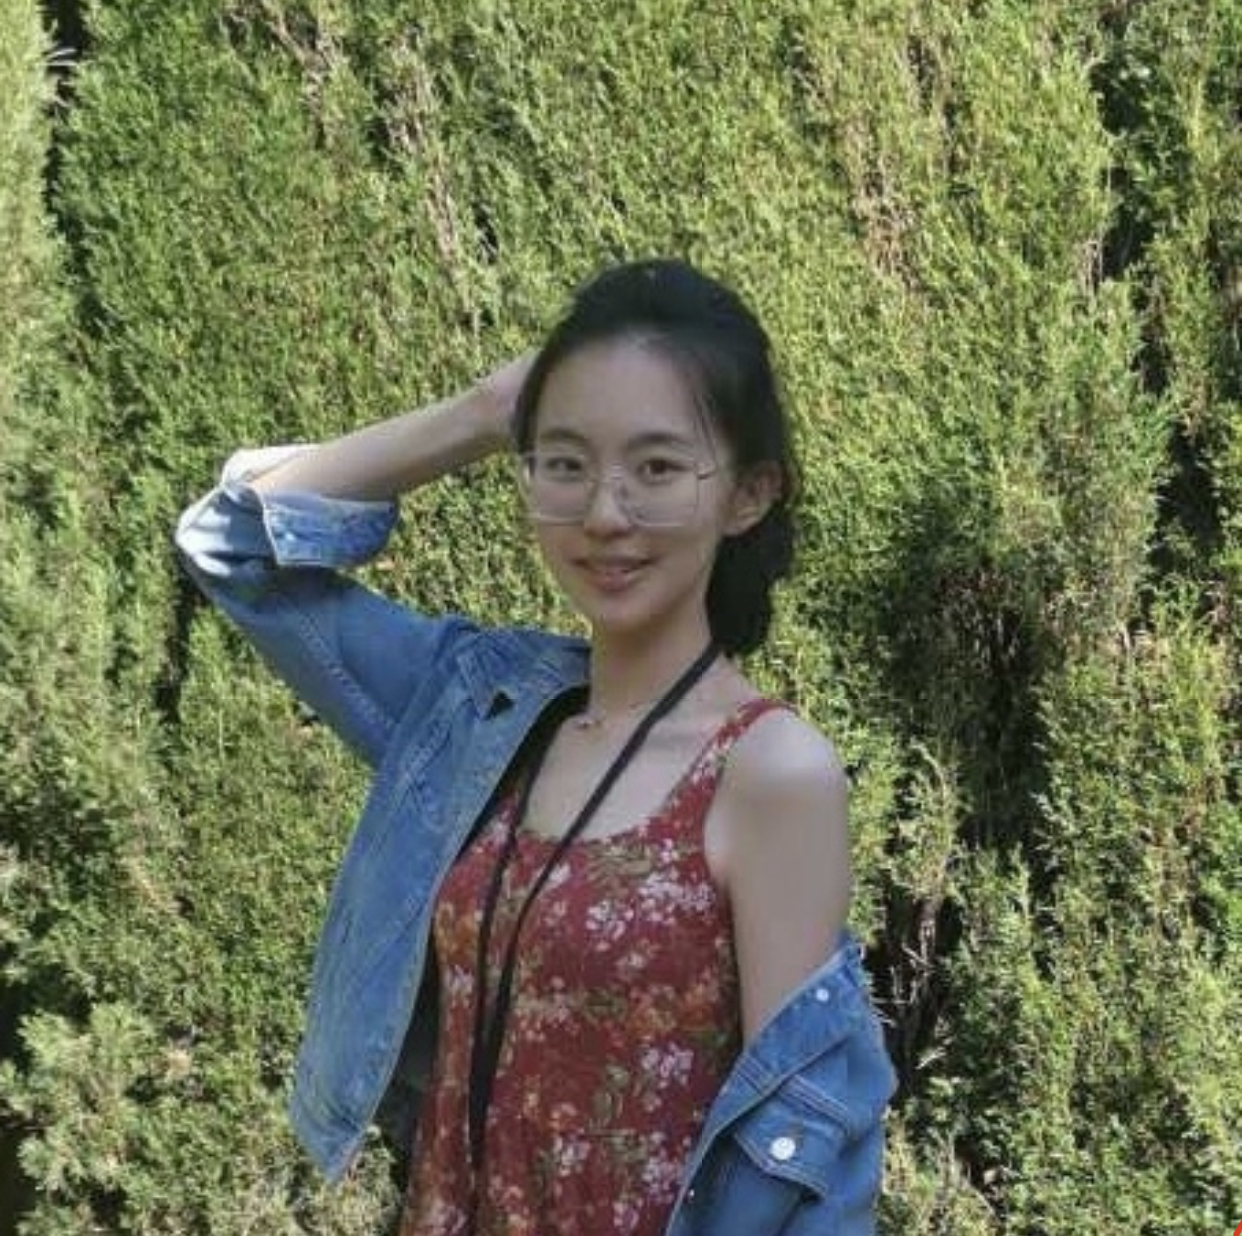 Serena Zhang